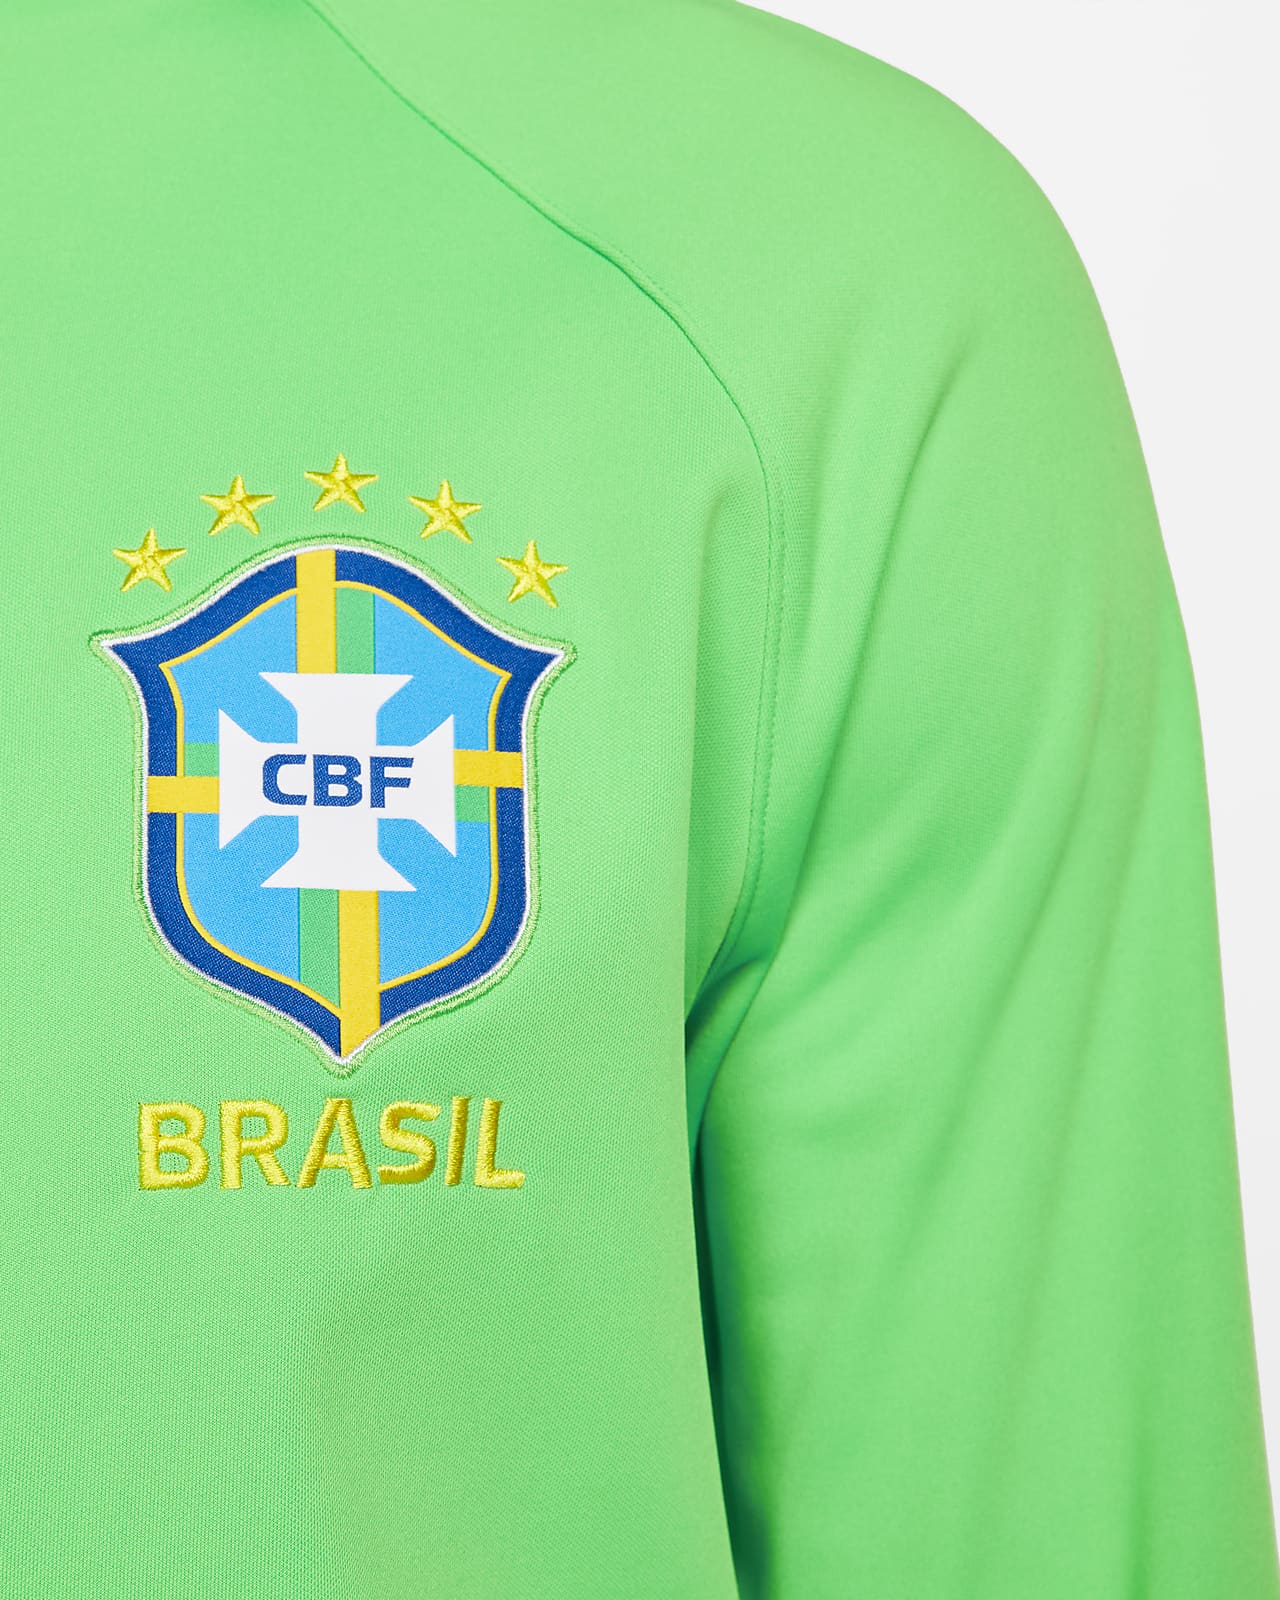 Nike Football World Cup 2022 Brazil unisex swoosh jacket in navy